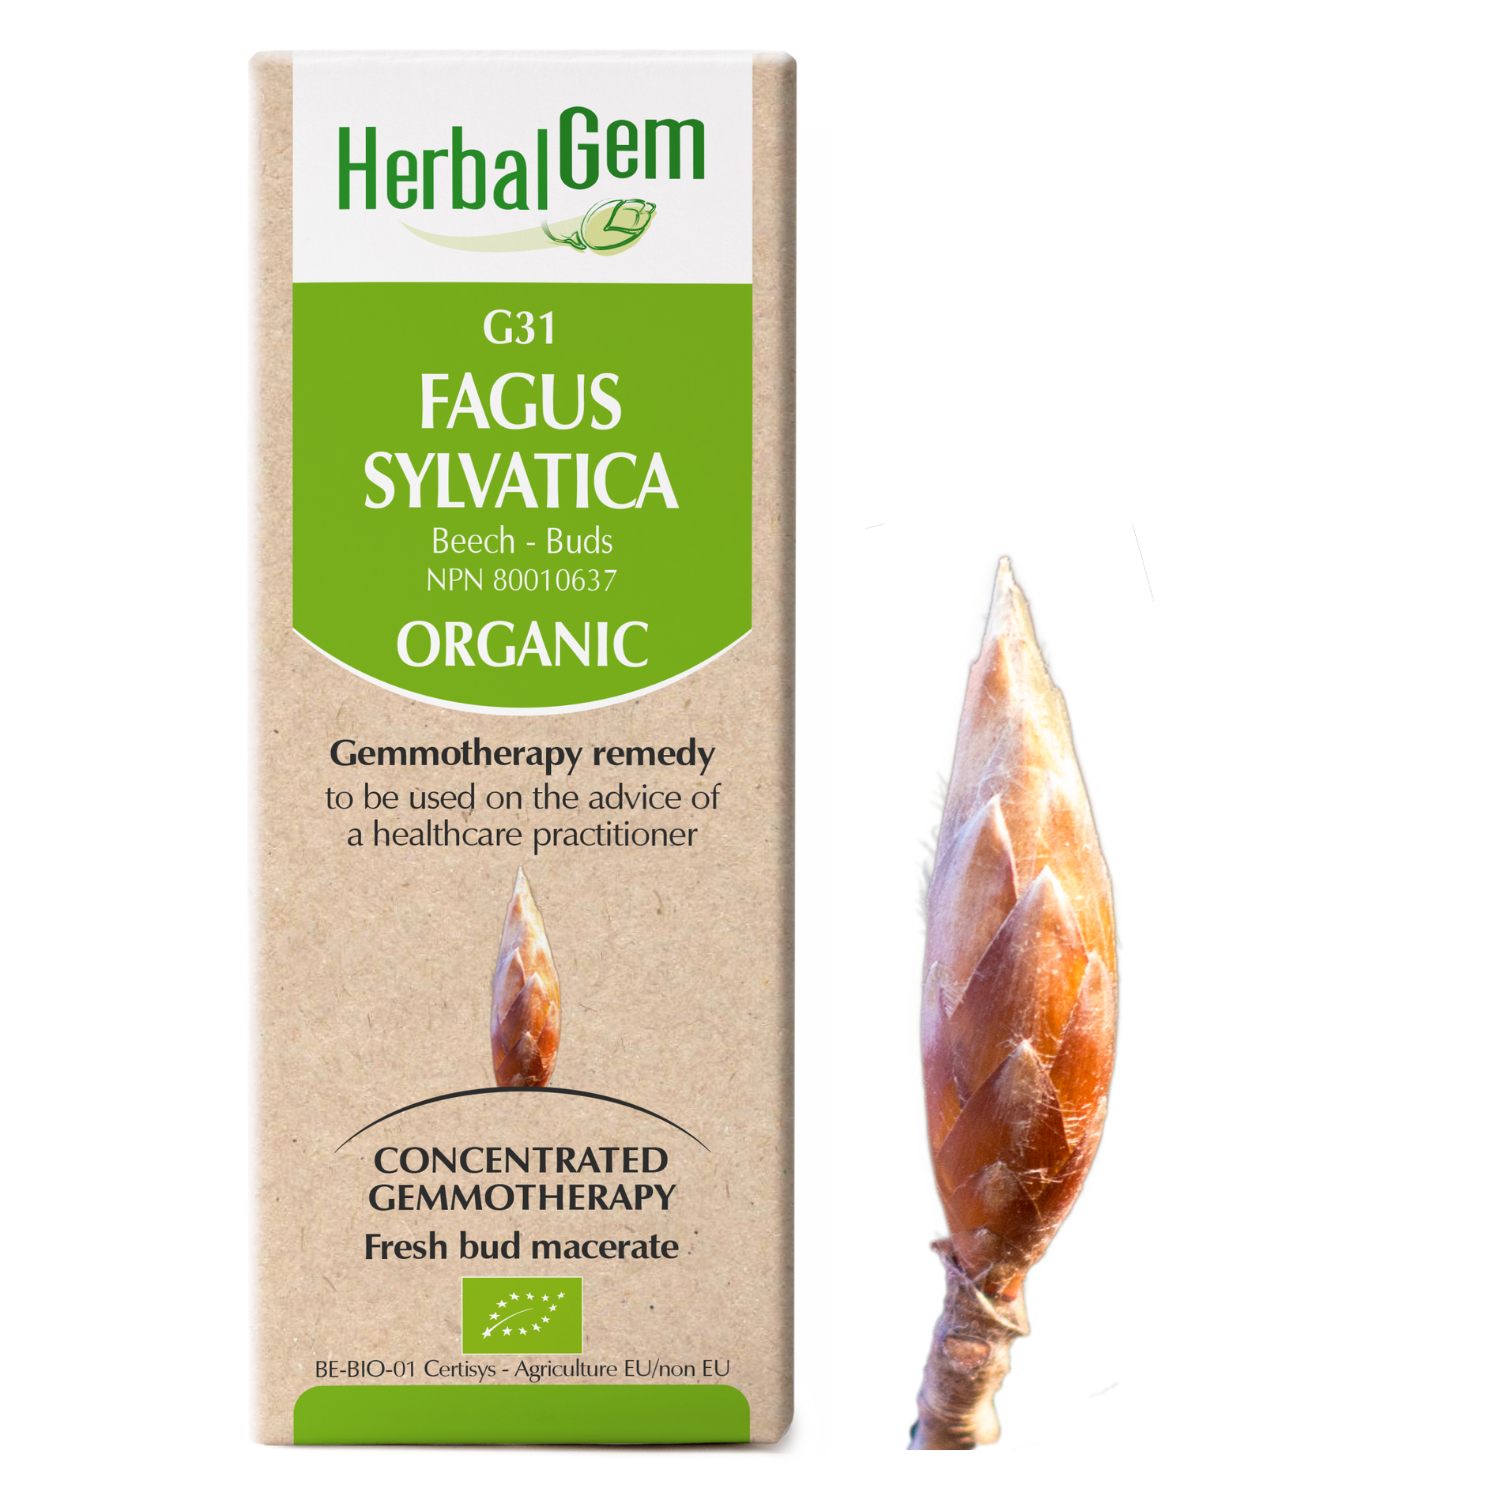 Fagus sylvatica (Beech) G31